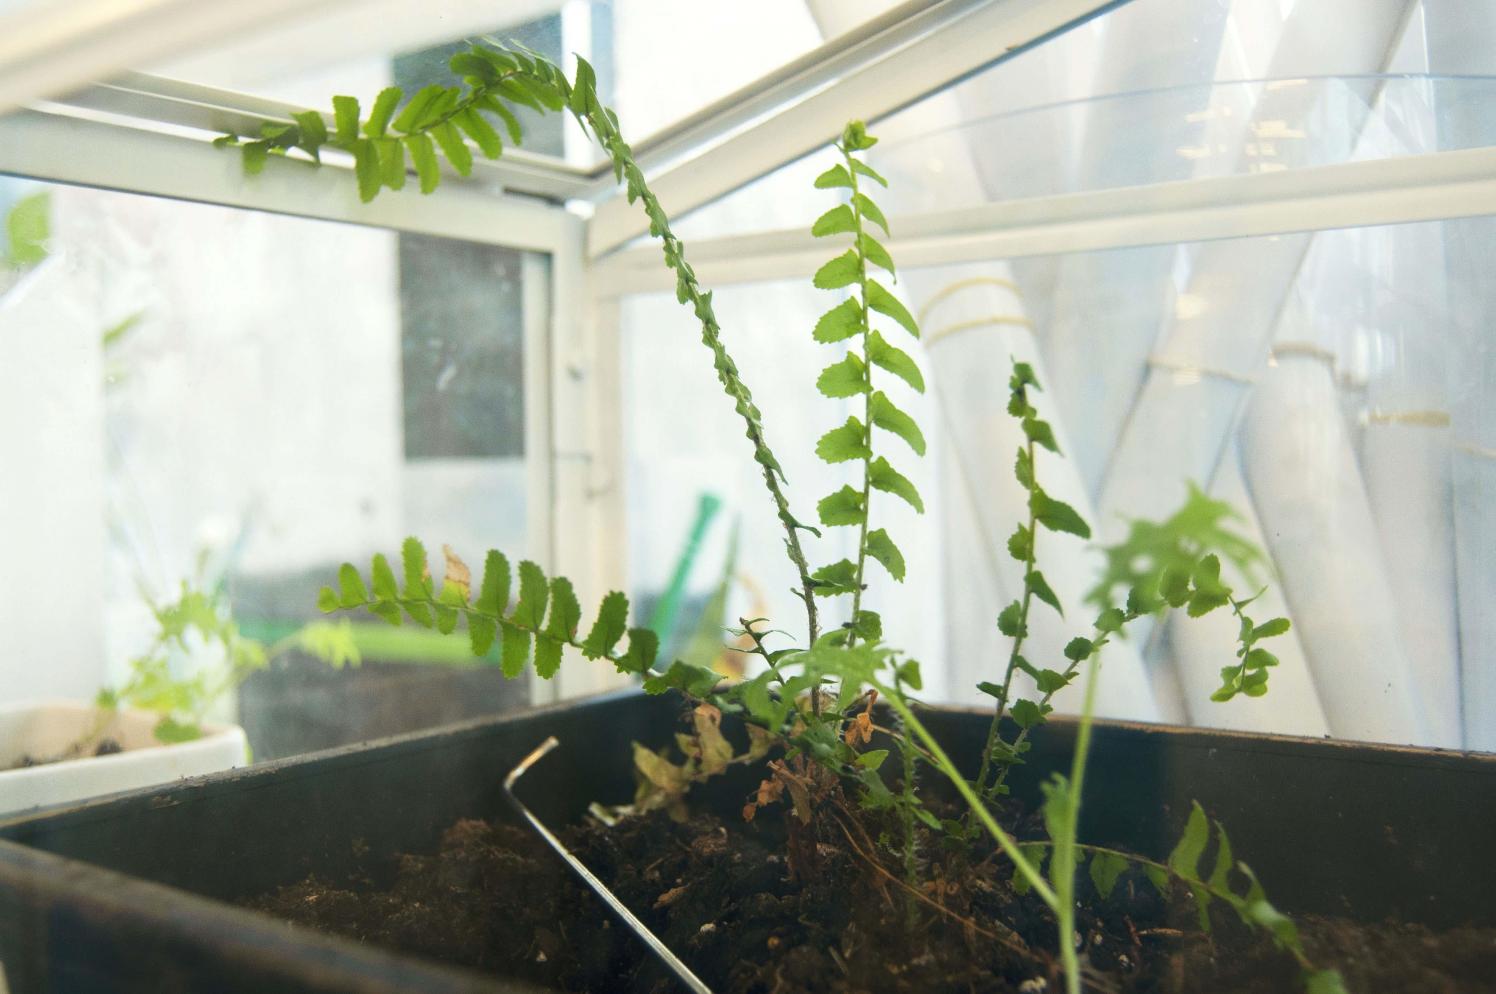 Plant growing in a terrarium.